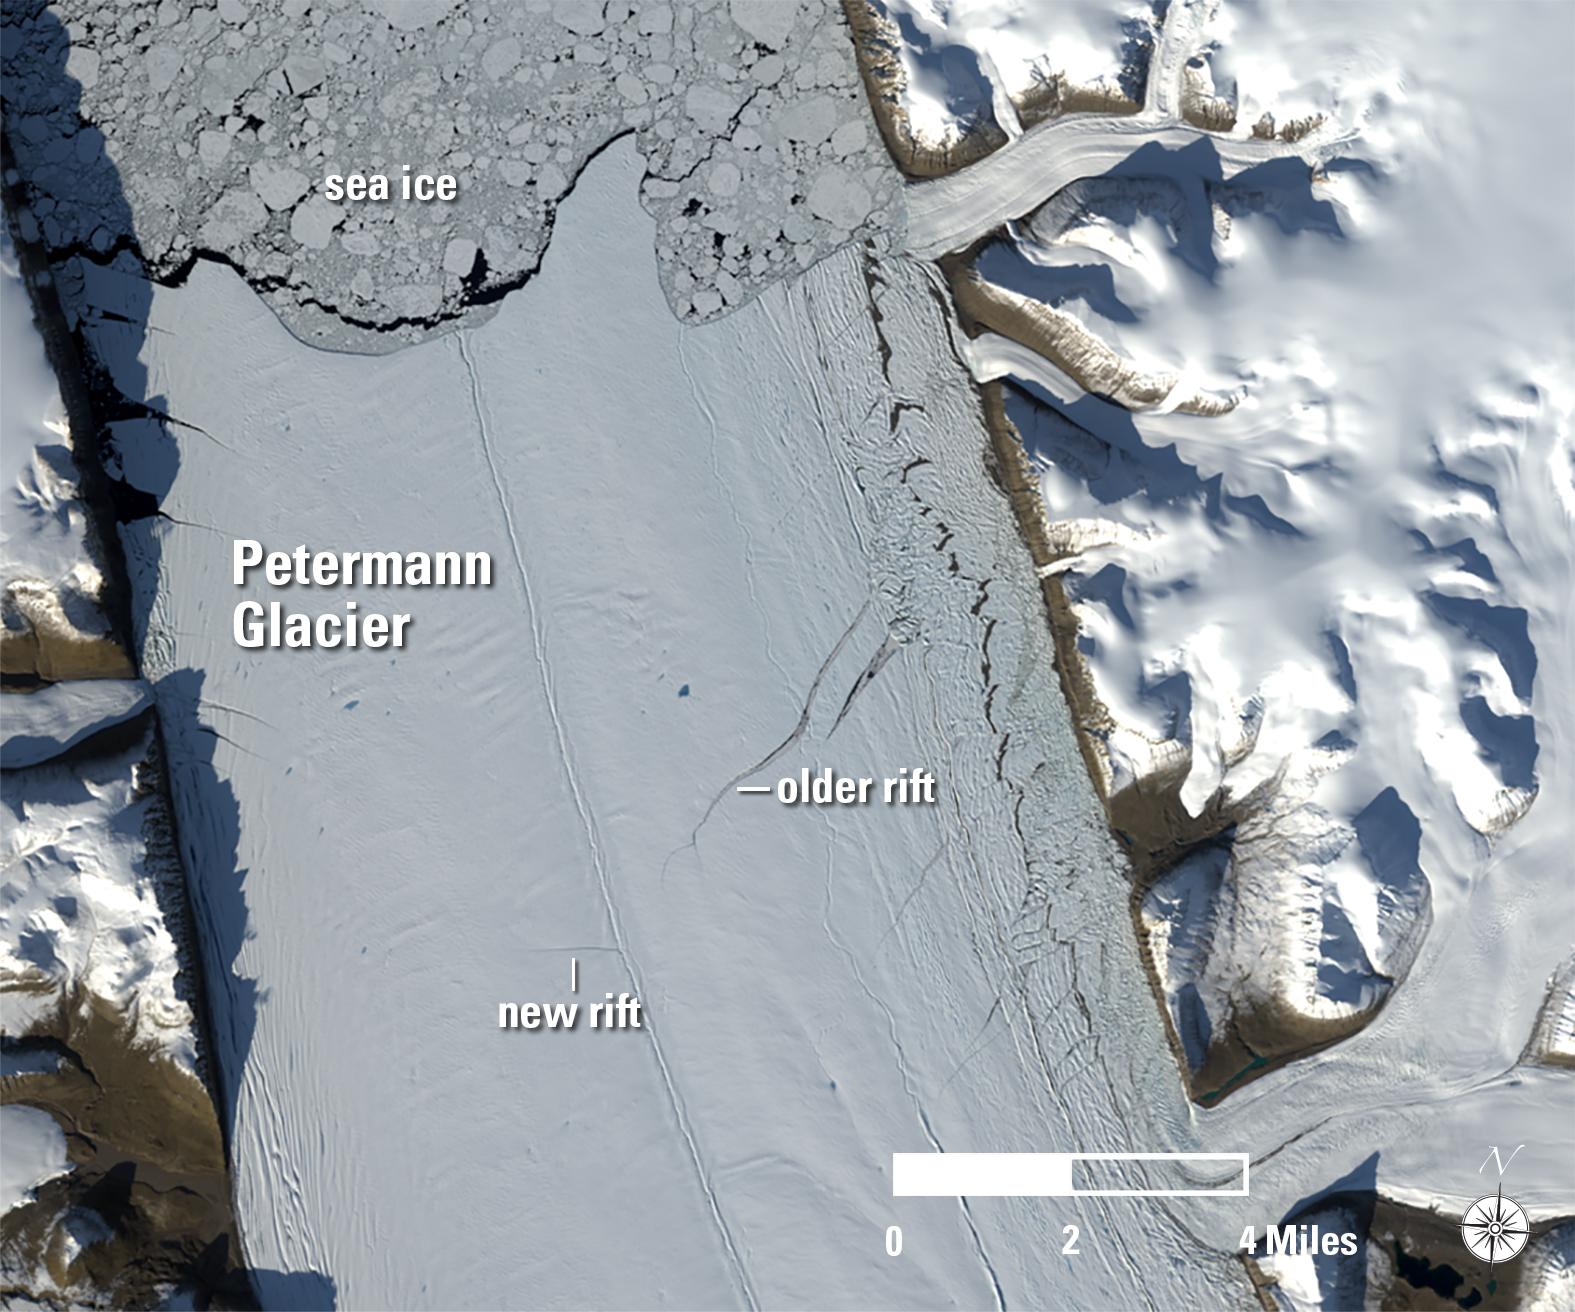 Aug. 30, 2017, Landsat 8 (path/row 39/1) — 2017 rift, Petermann Glacier, Greenland 3:01:53 p.m. local time in Greenland